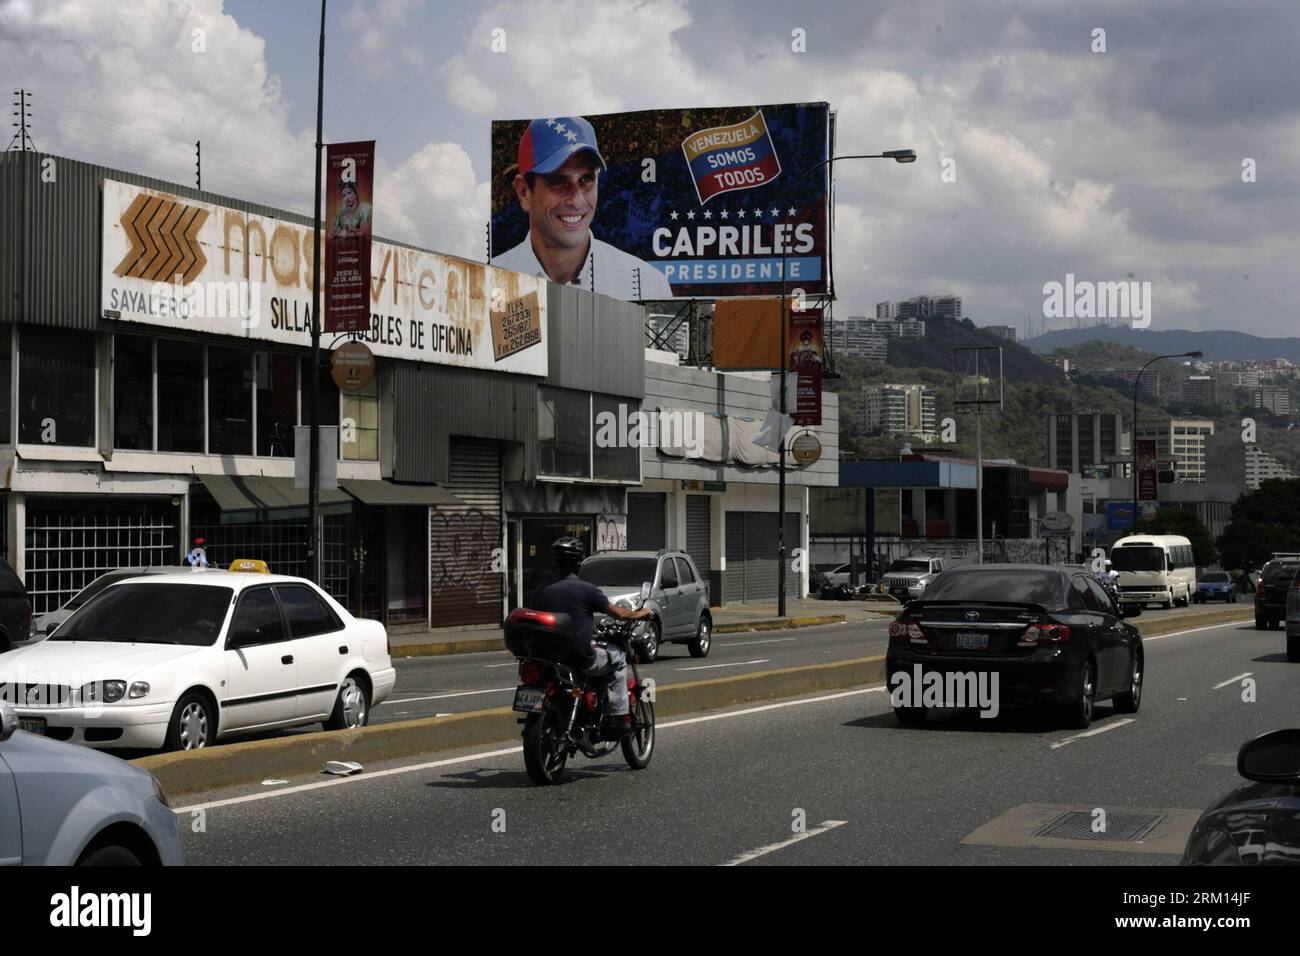 Bildnummer: 59513246  Datum: 13.04.2013  Copyright: imago/Xinhua (130413) -- CARACAS, April 13, 2013 (Xinhua) -- An electoral billboard in support of Venezuela s opposition presidential candidate Henrique Capriles is seen at Las Mercedes neighborhood in Caracas, capital of Venezuela, on April 13, 2013. Venezuela will hold presidential elections on April 14. (Xinhua/Juan Carlos Hernandez) VENEZUELA-CARACAS-ELECTIONS PUBLICATIONxNOTxINxCHN Politik Wahlkampf Präsidentschaftswahl Wahl xas x0x 2013 quer premiumd      59513246 Date 13 04 2013 Copyright Imago XINHUA  Caracas April 13 2013 XINHUA to E Stock Photo